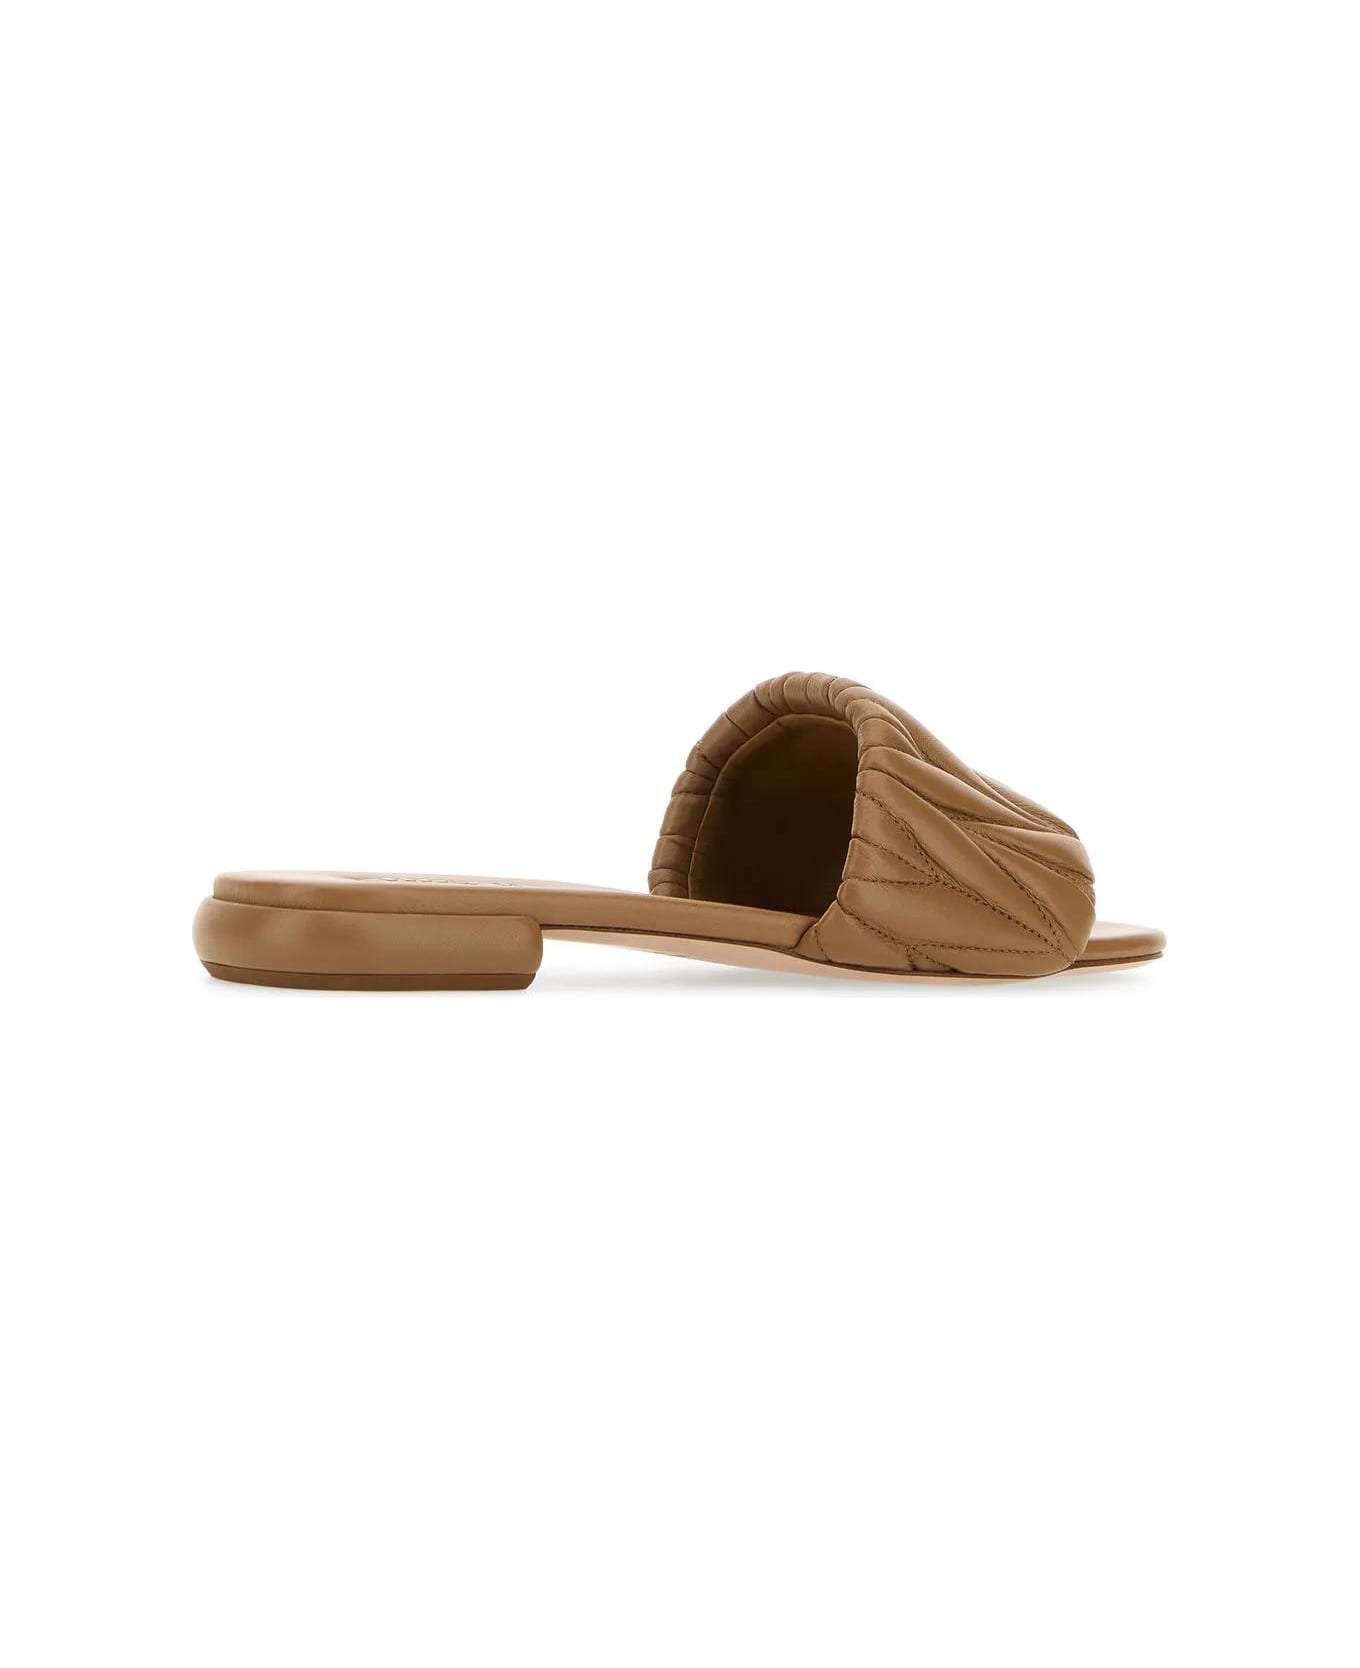 Miu Miu Caramel Nappa Leather Slippers - Caramello サンダル